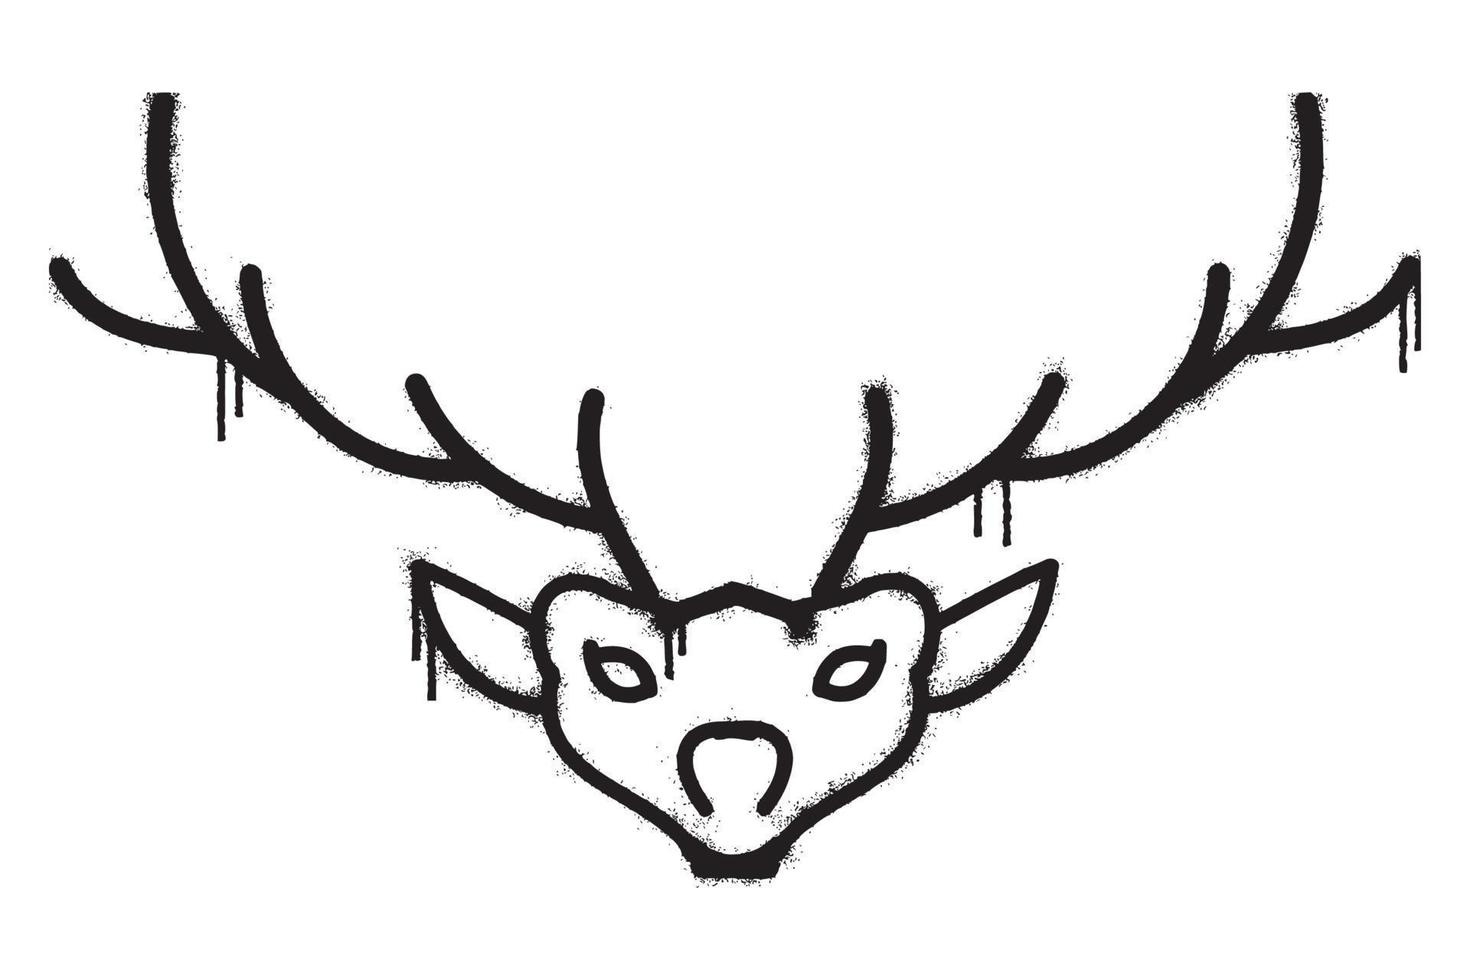 Grafffiti deer head  with black spray paint vector